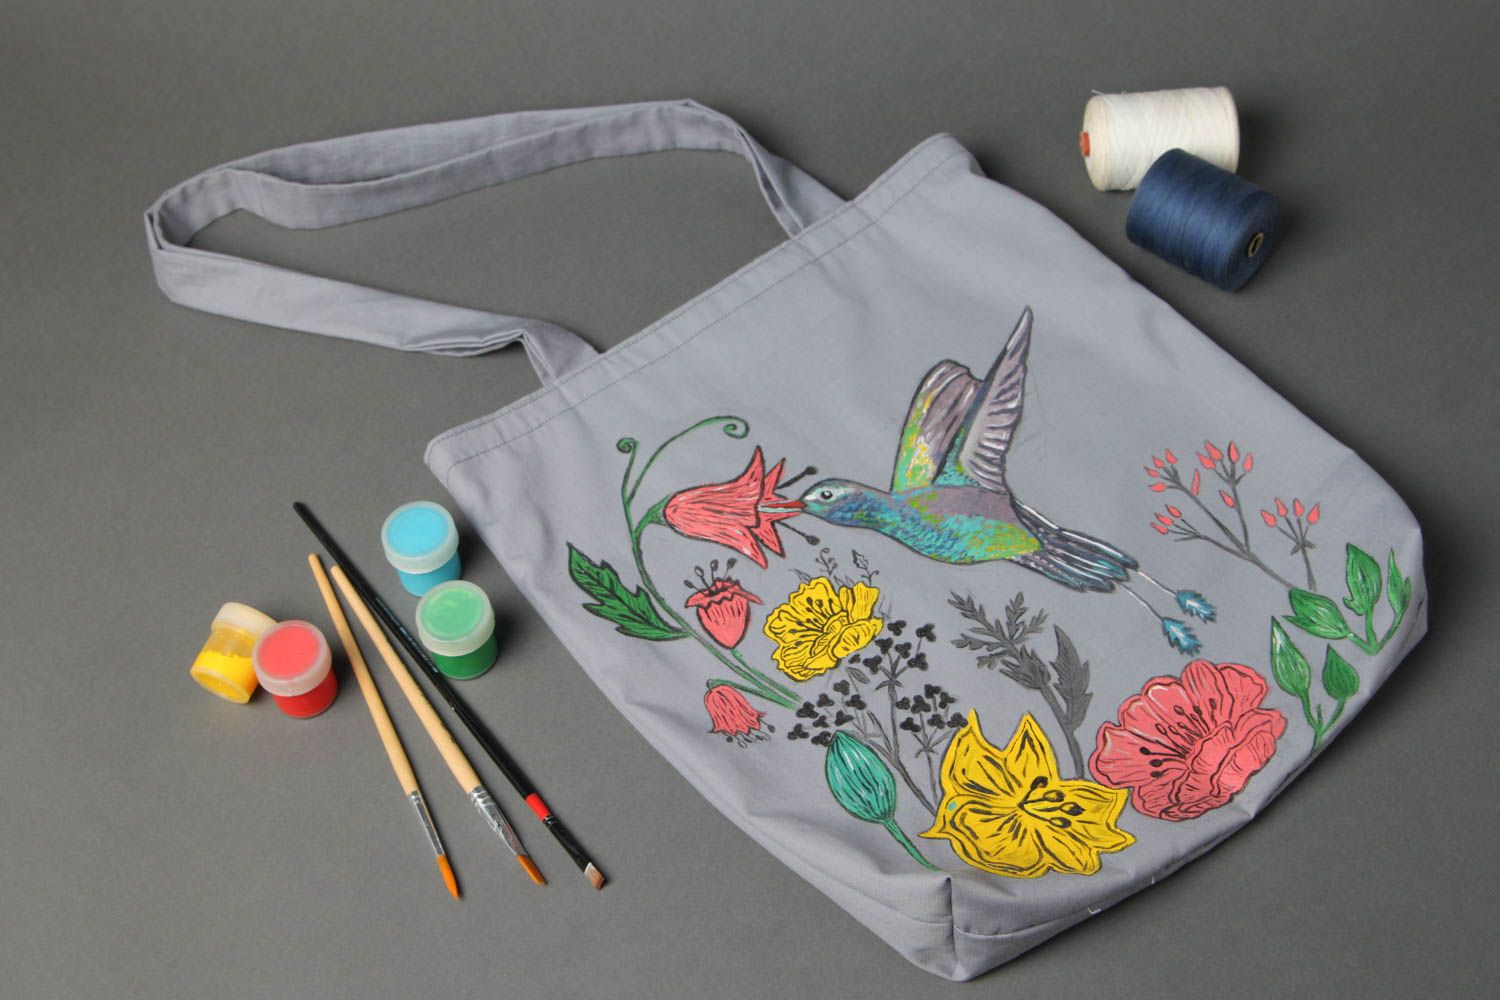 Handmade bag handbags for women fashion handbags designer accessories gift ideas photo 1